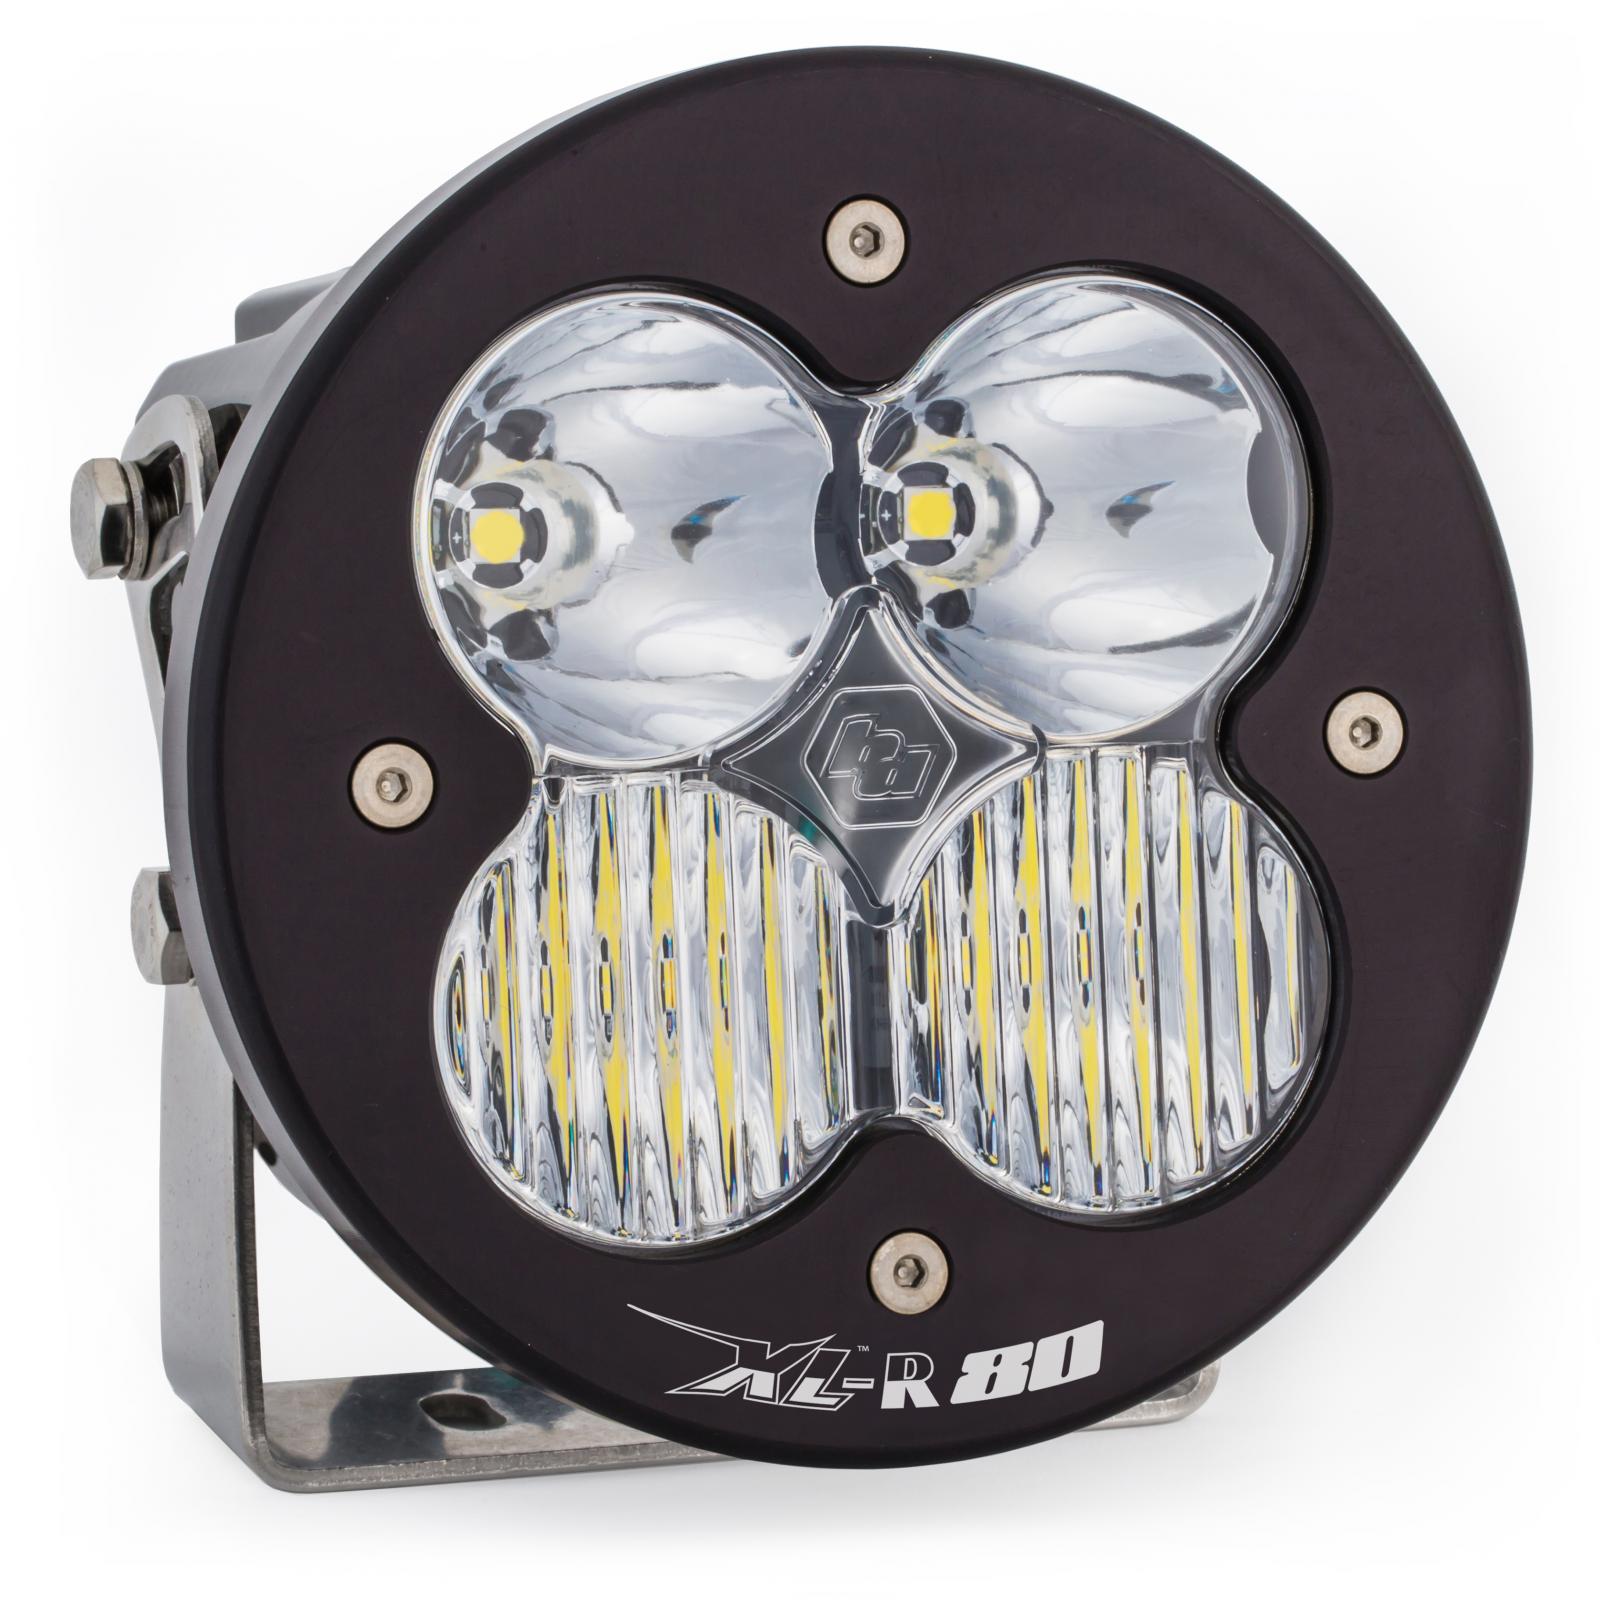 Baja Designs LED Light Pods Clear Lens Spot Each XL R 80 Driving/Combo